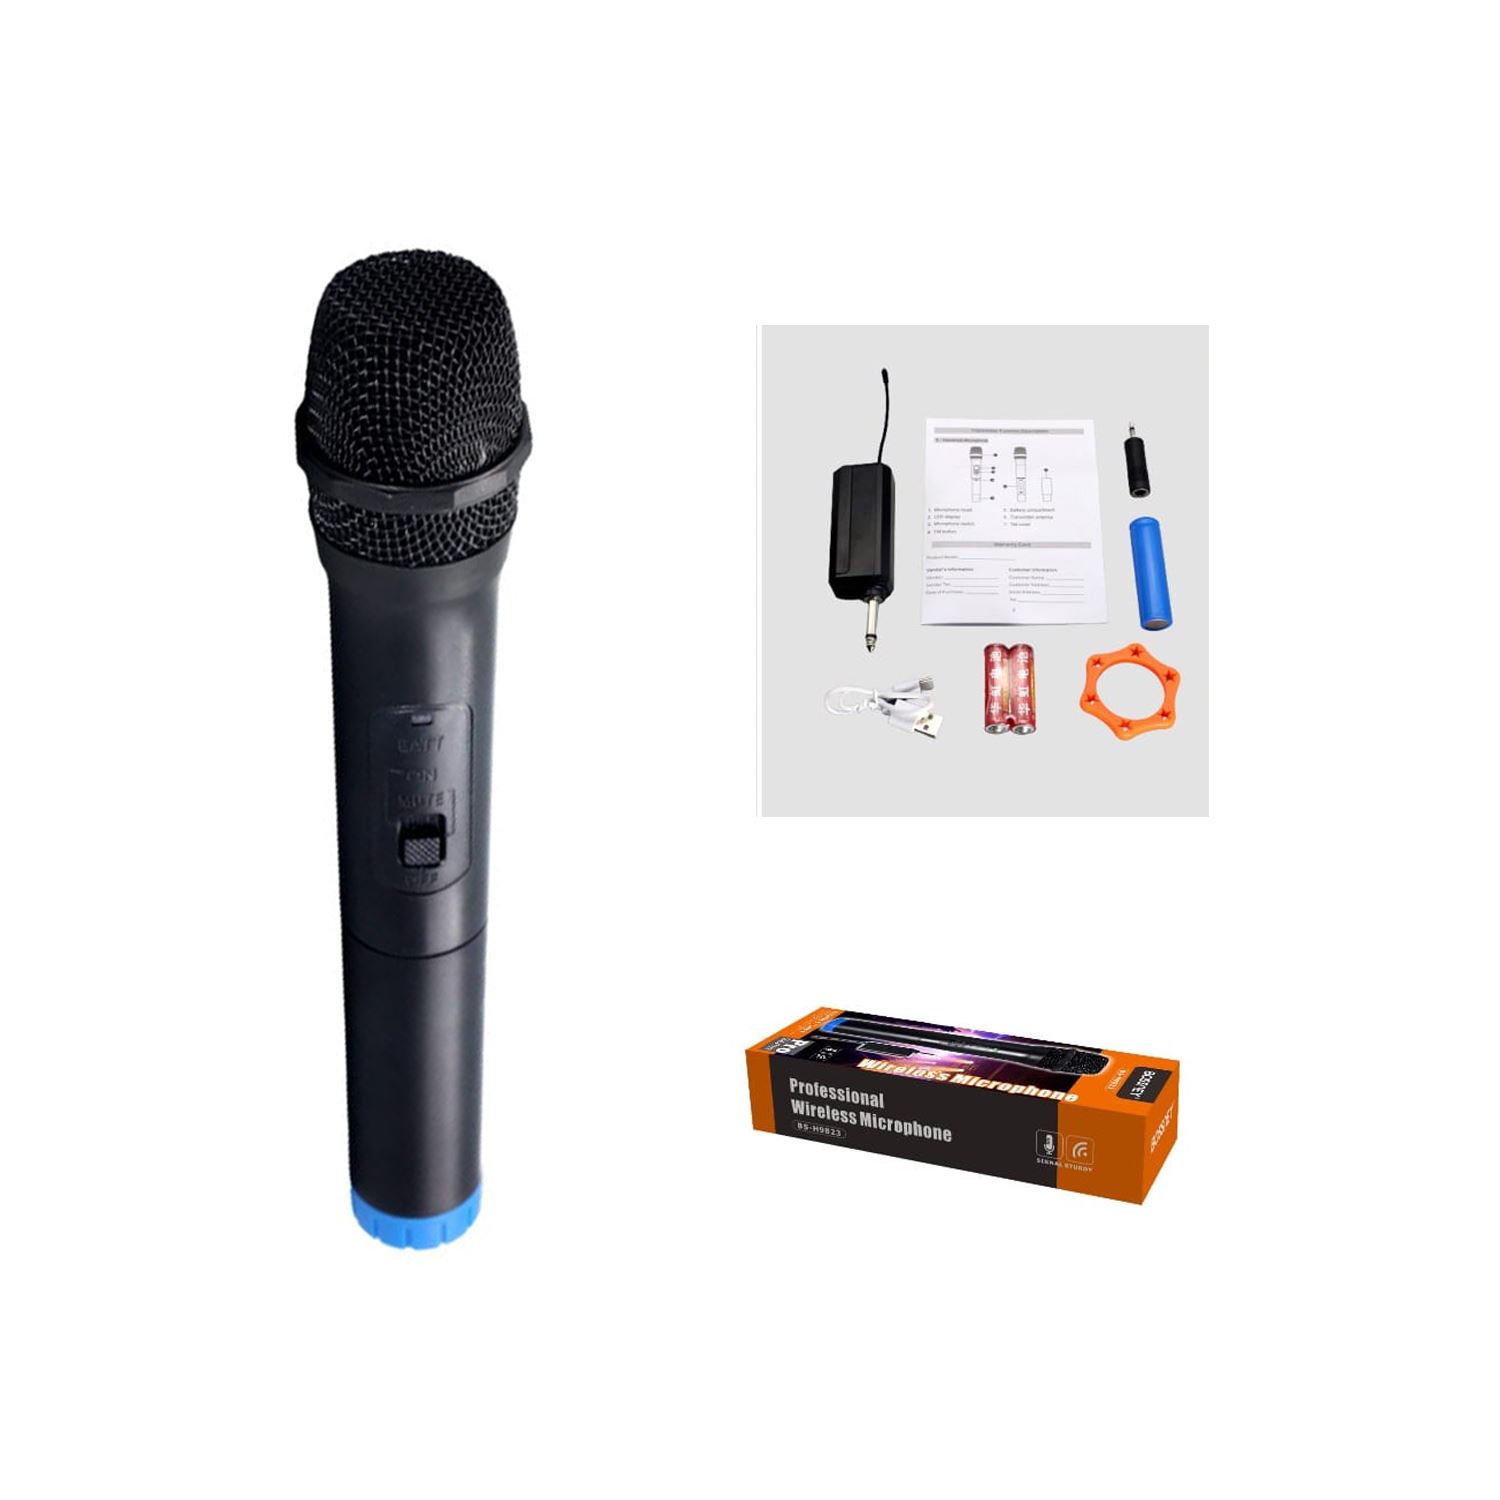 Micrófono de juguete de 9.5 pulgadas para , micrófonos de plástico